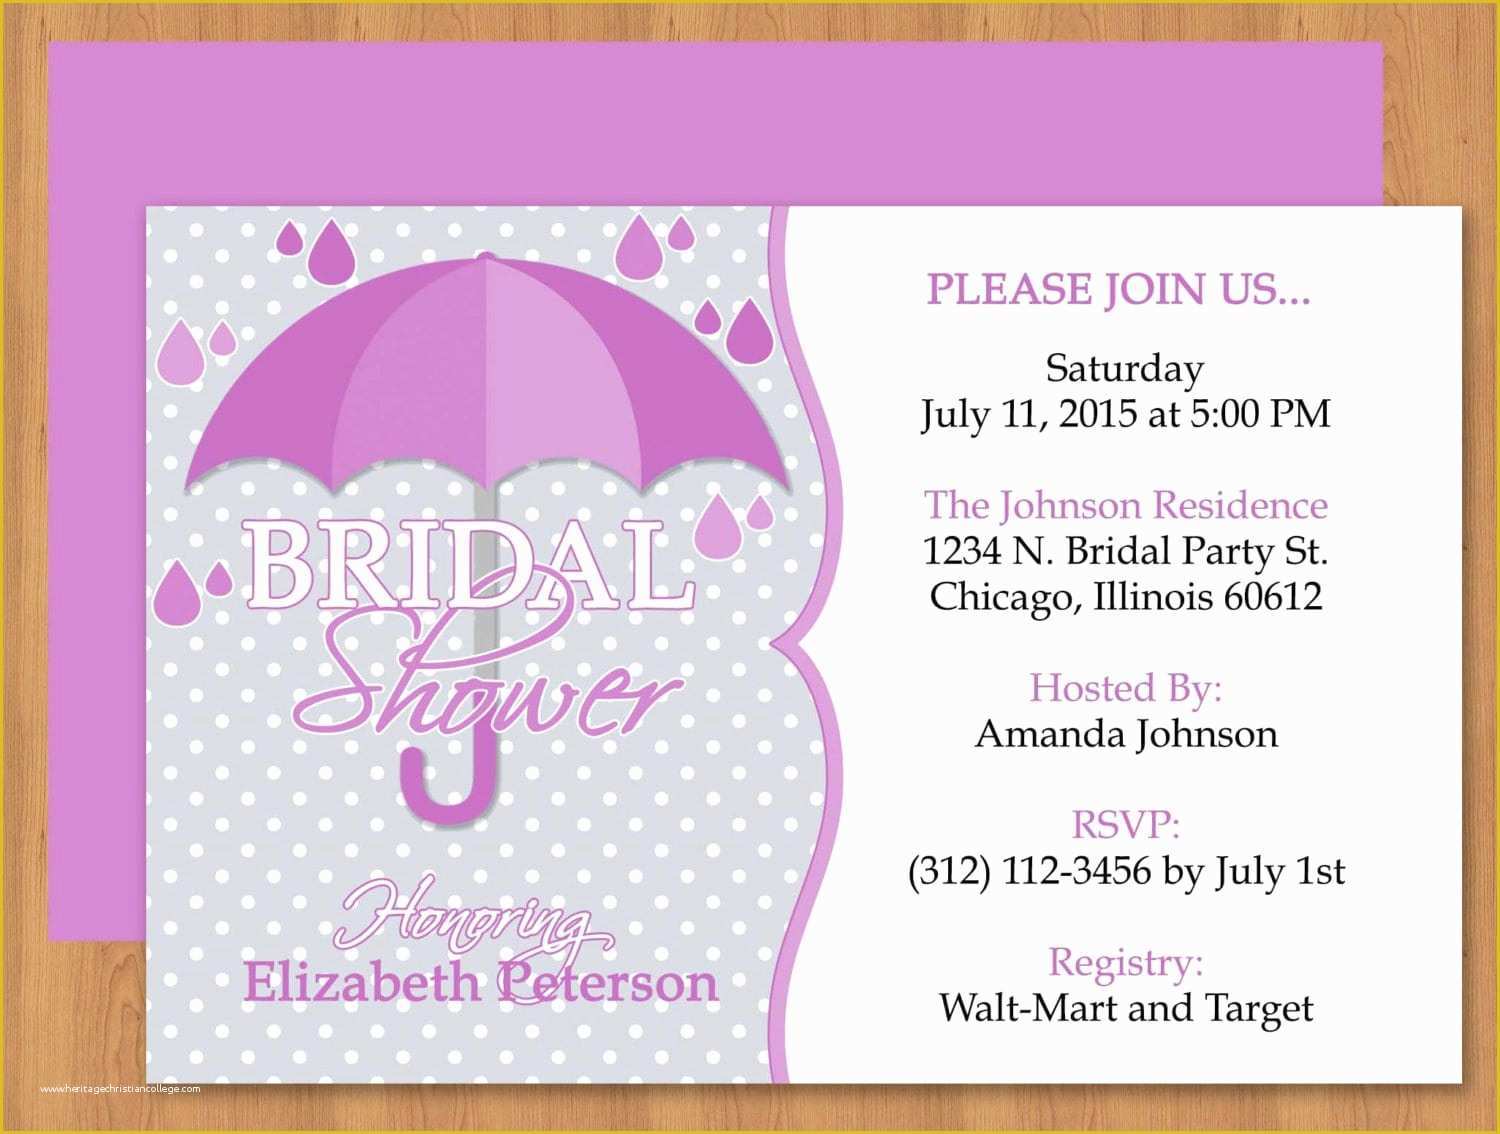 Bridal Shower Invitation Templates Microsoft Word Free Of Bridal Shower Invitation Template for Word